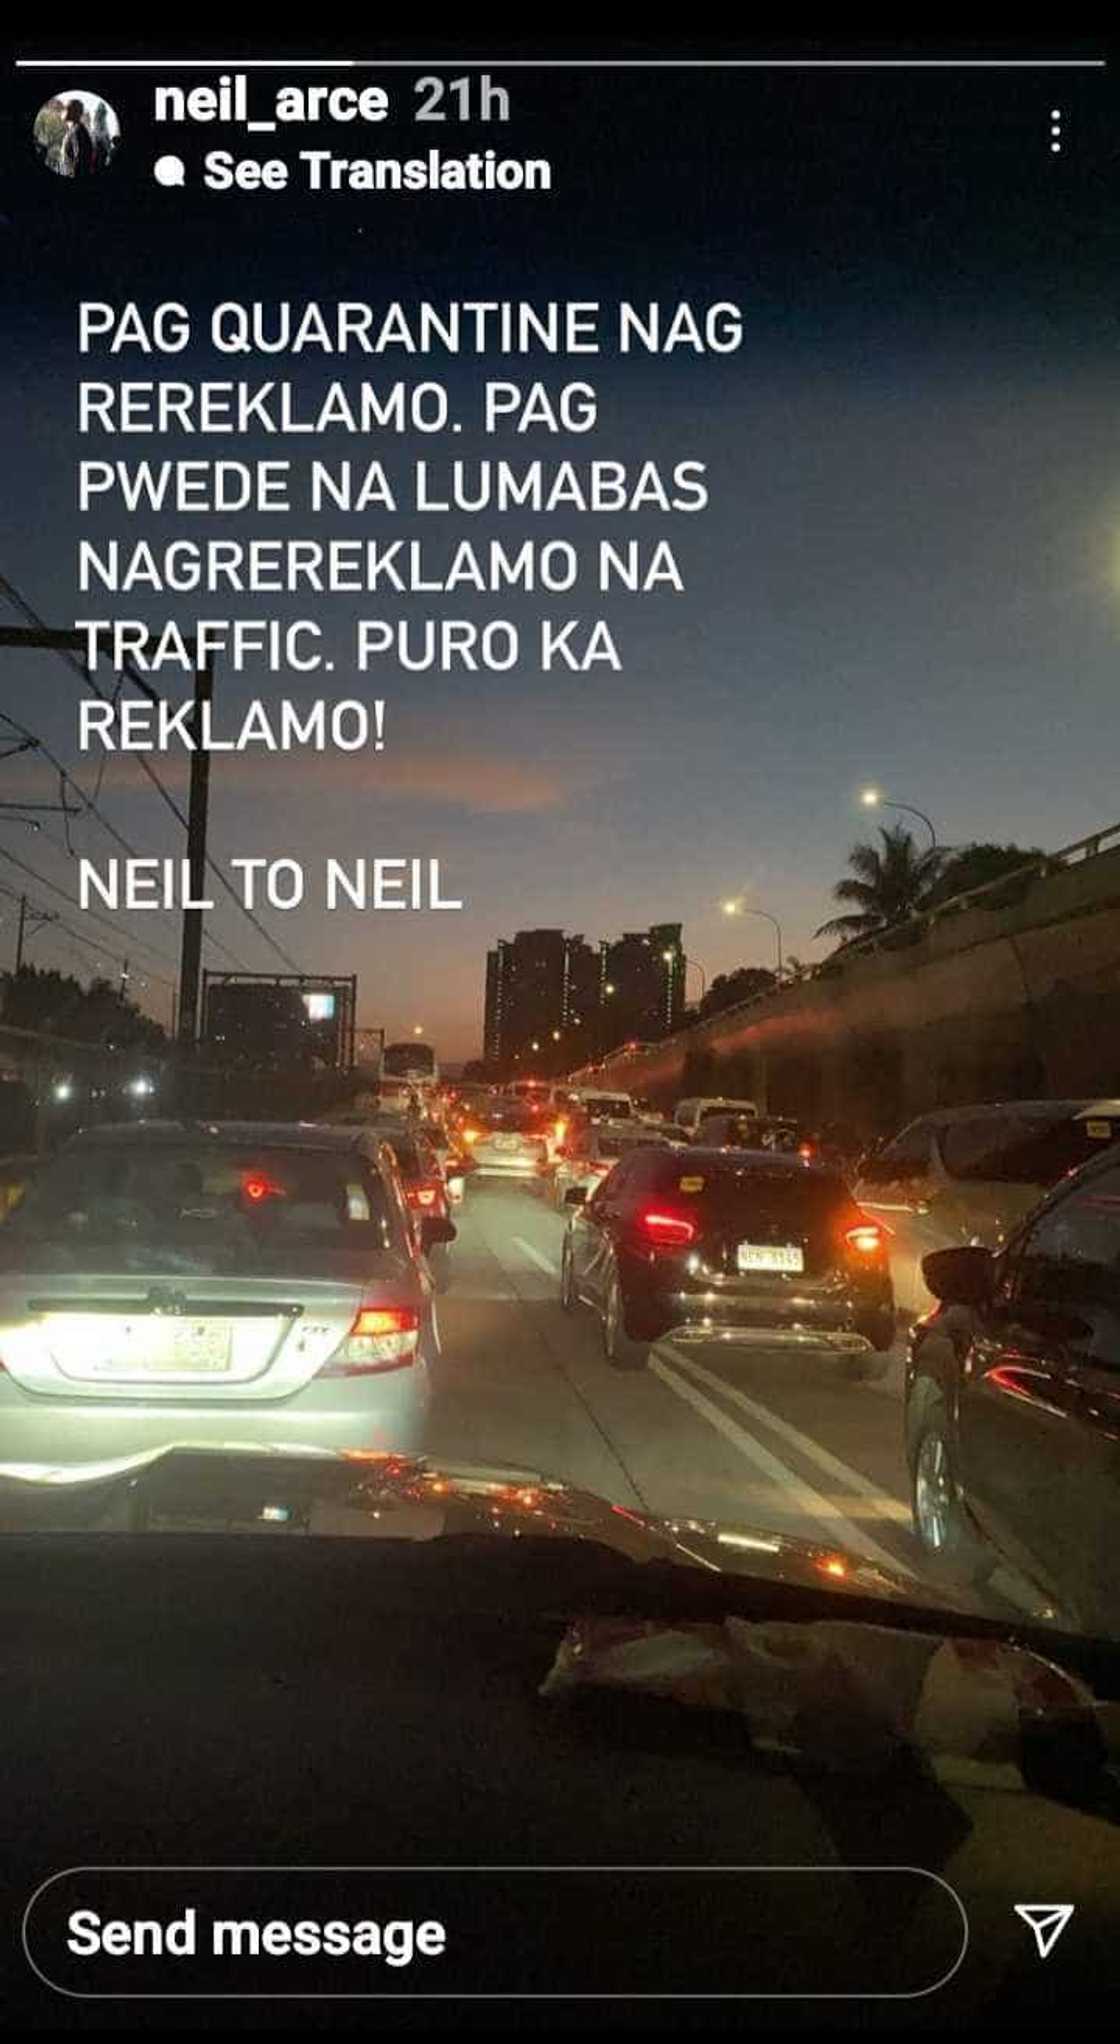 Neil Arce posts about quarantine, traffic; tells himself: “Puro ka reklamo”